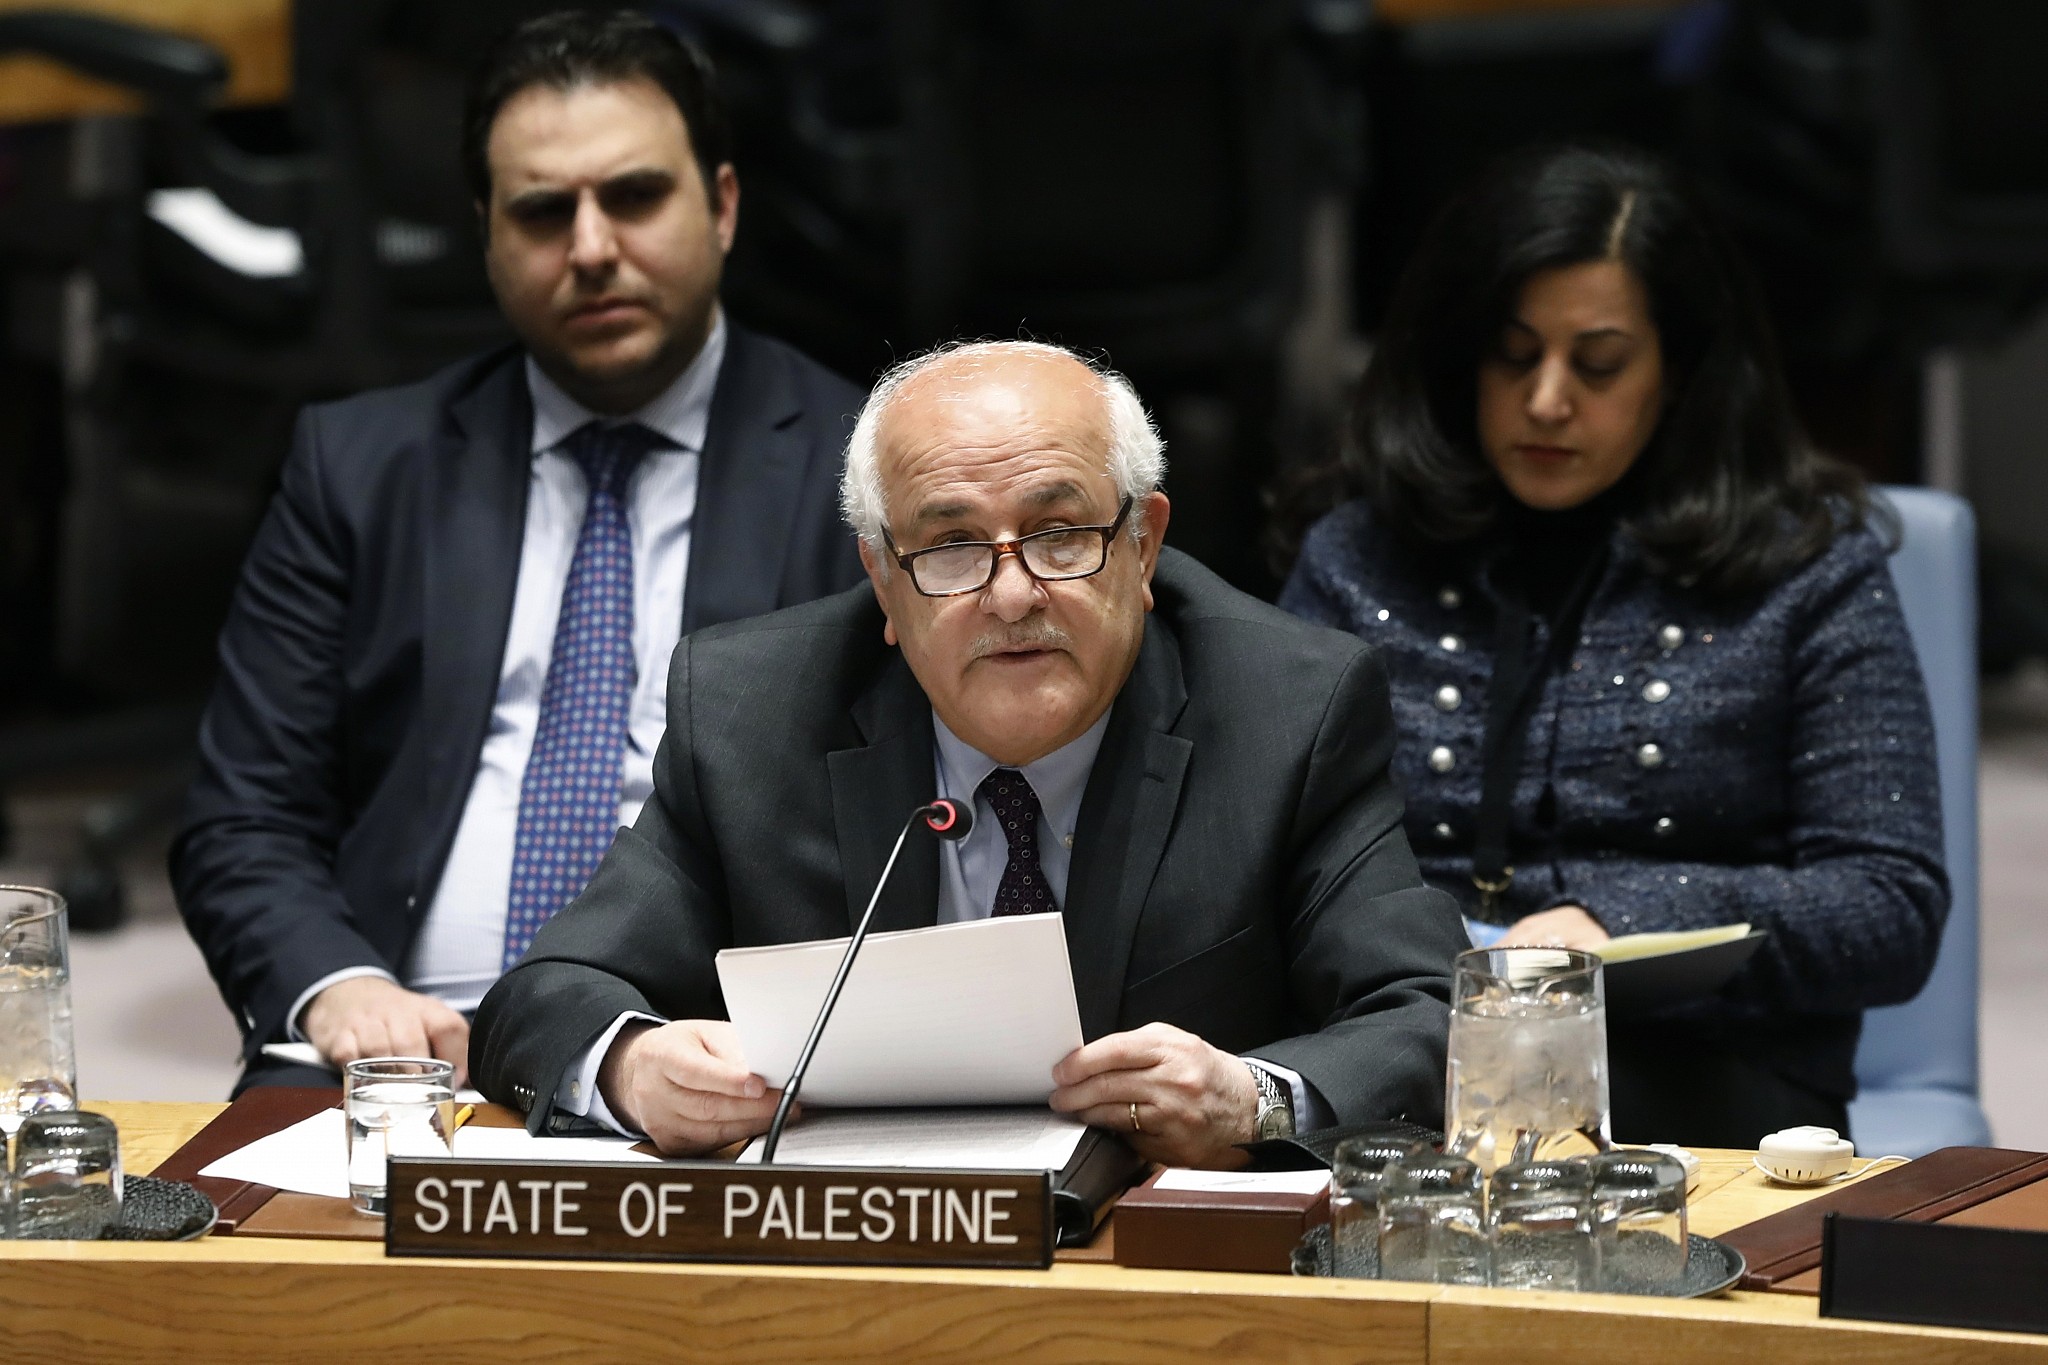 UN Security Council to deliberate elections in Palestine – Permanent Representative